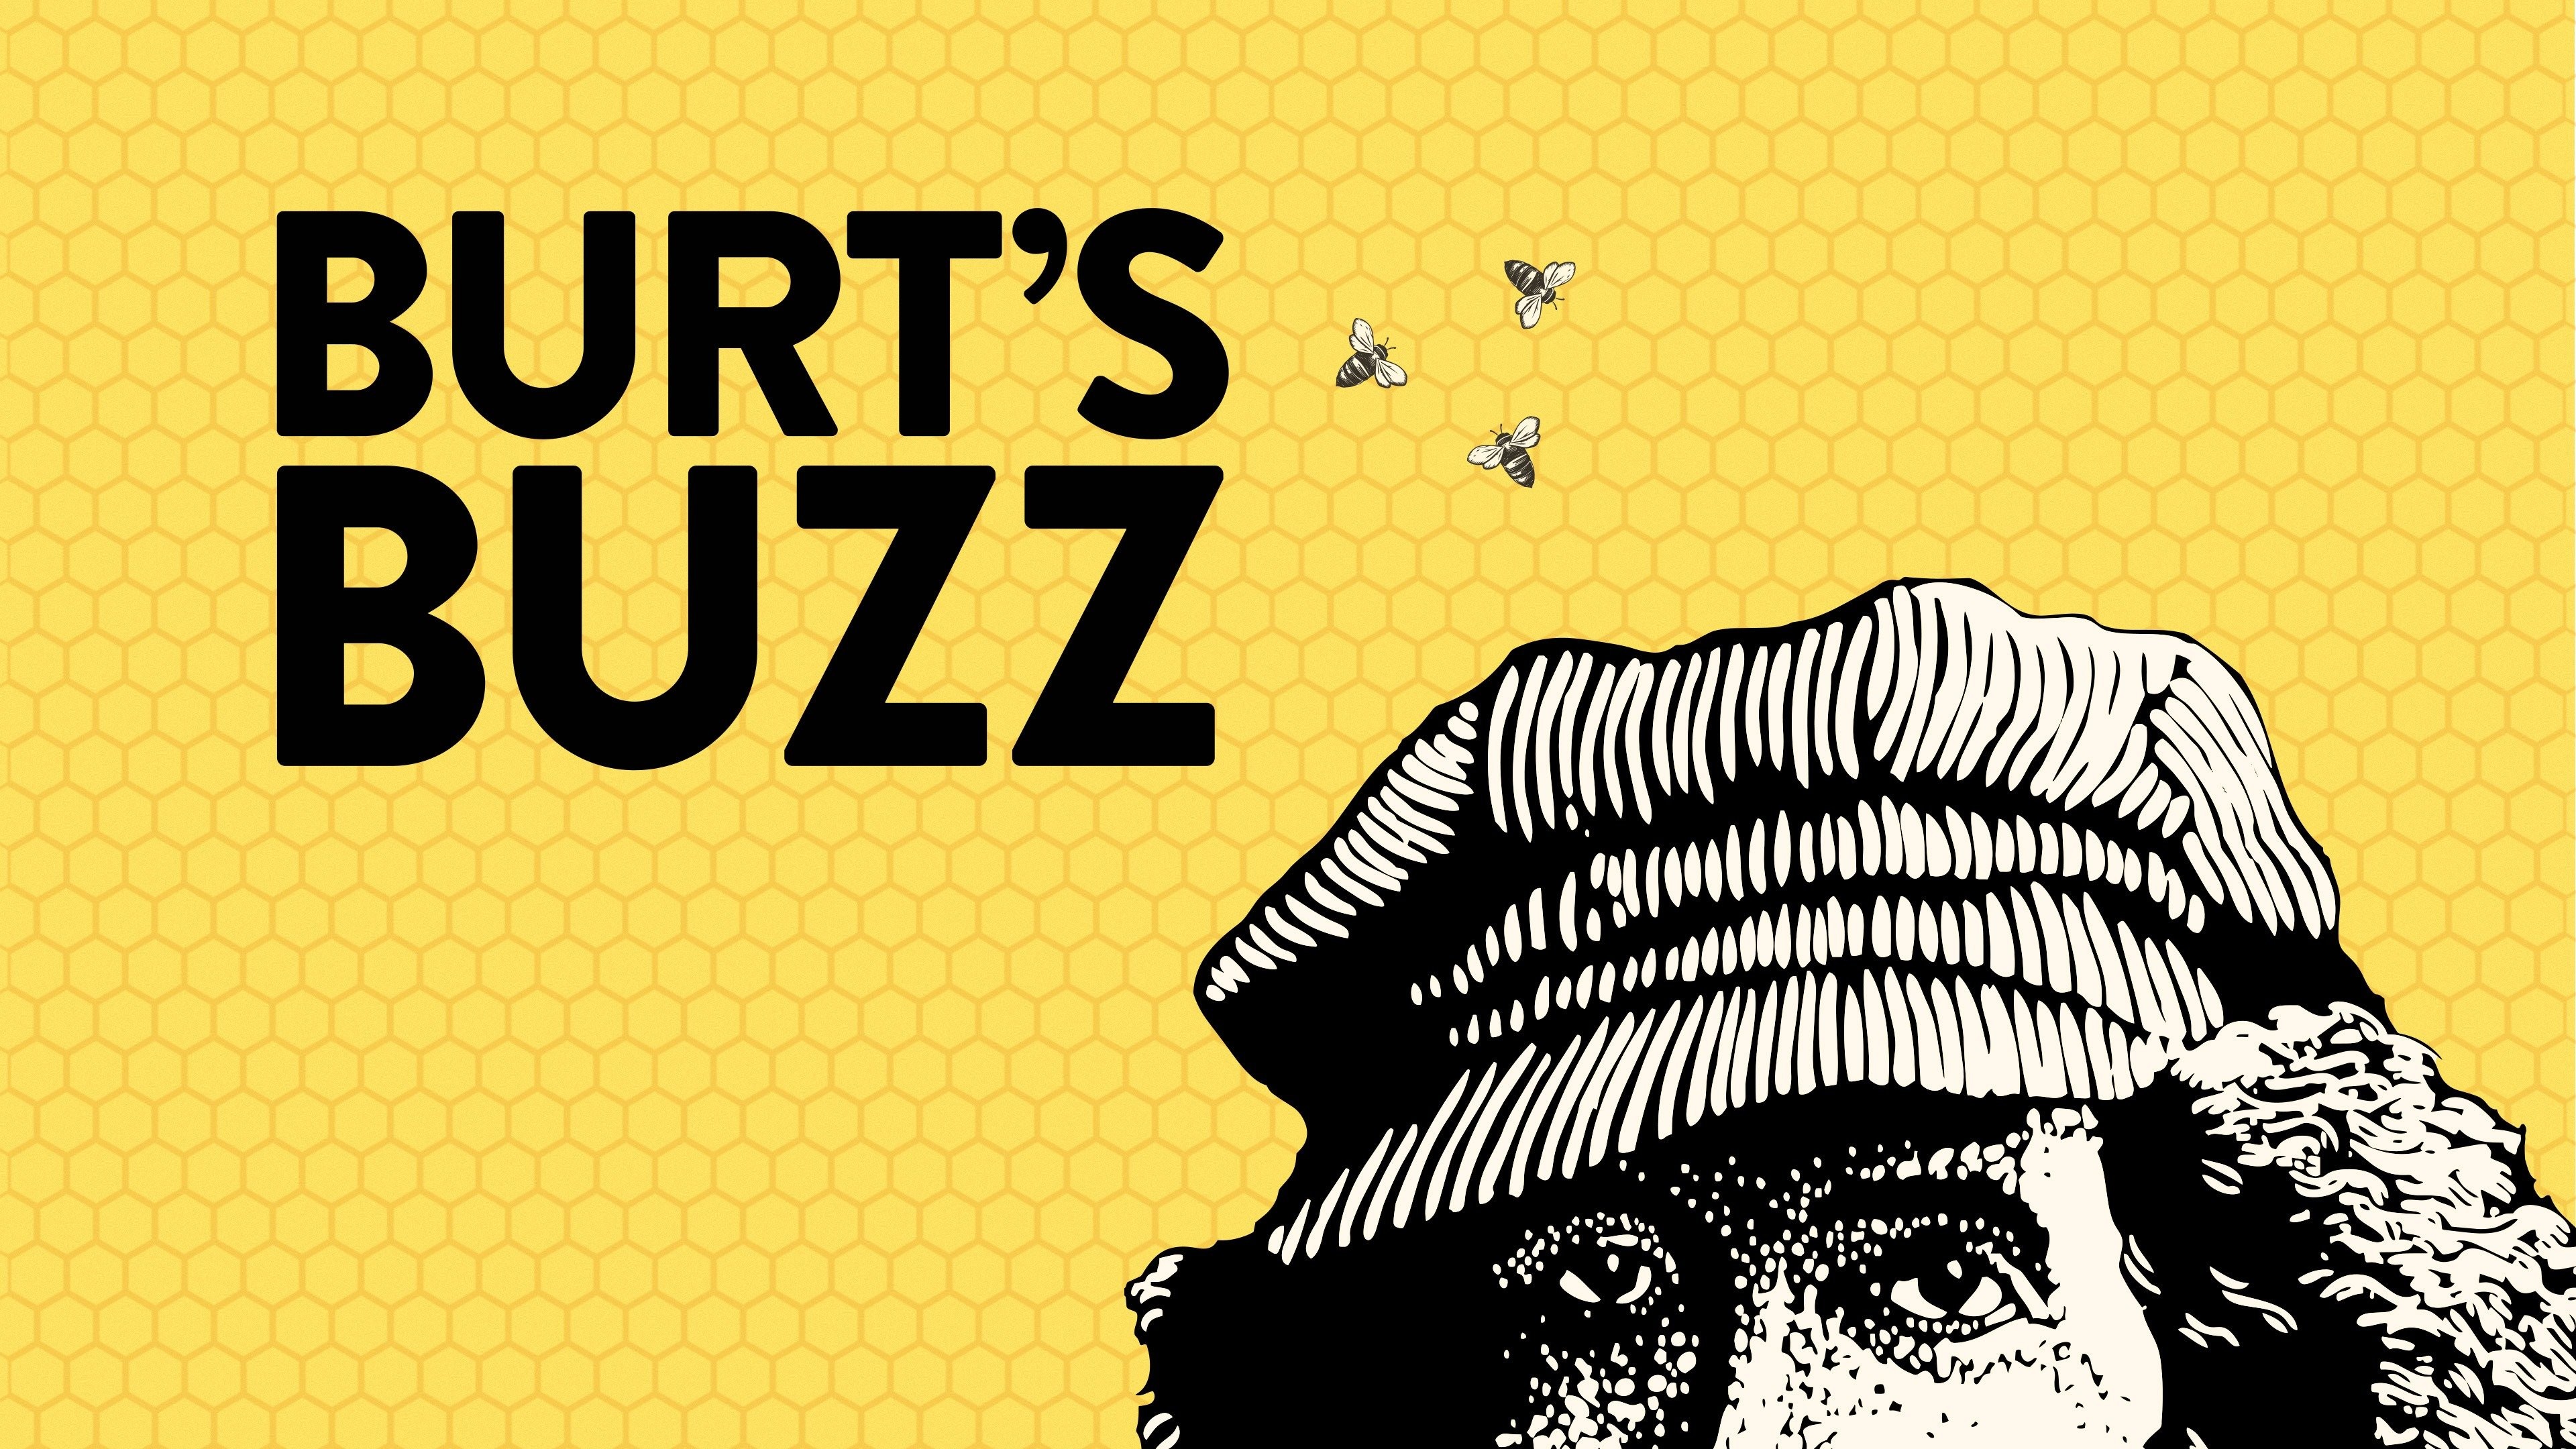 Dangerous Teen Trend? Burt's Bees to Enhance Buzz